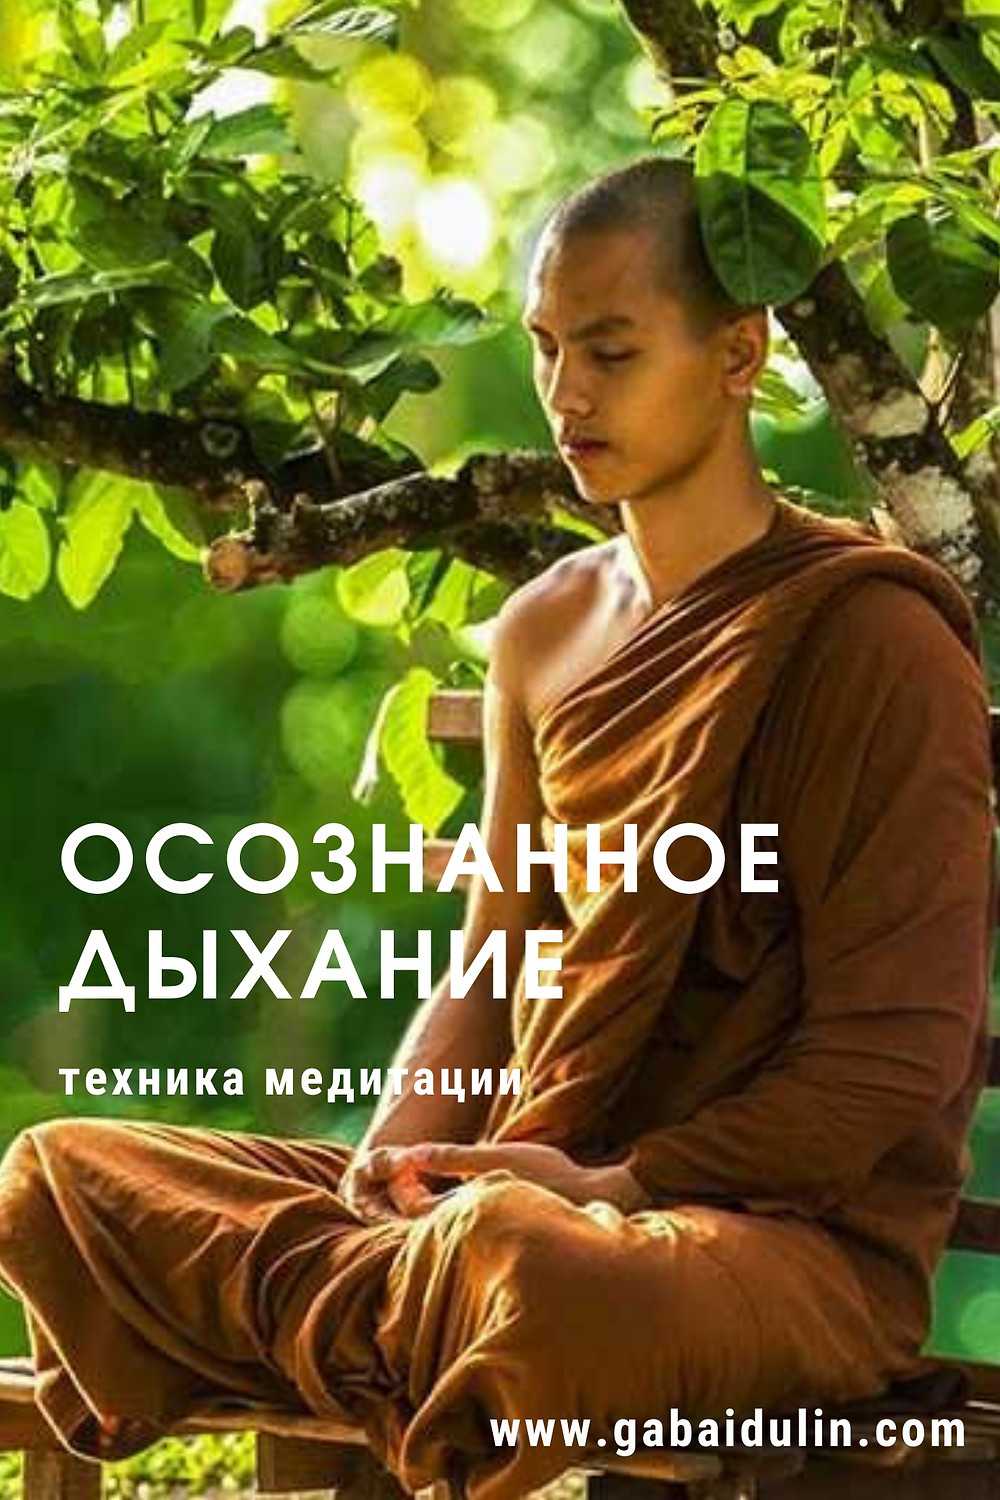 Anapanasati sutta (mindfulness of breathing) original text by gautama buddha